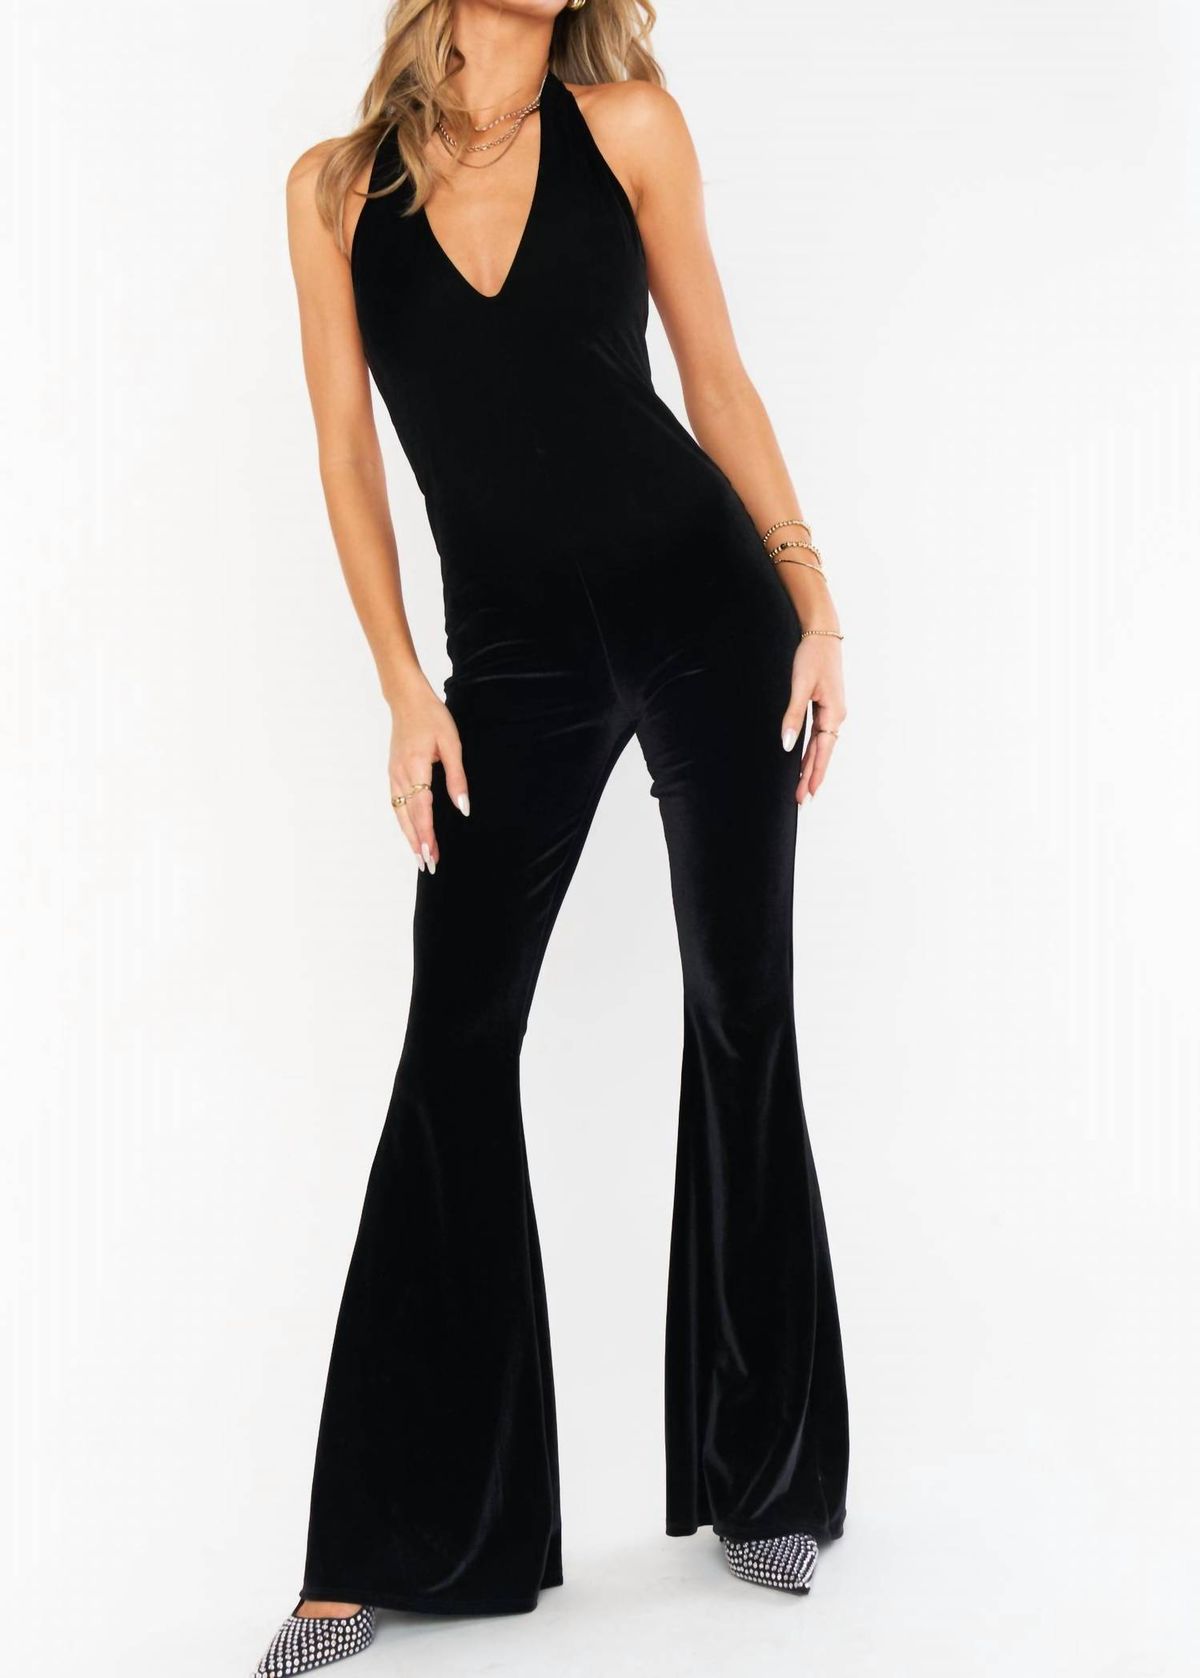 Style 1-3649422741-3236 Show Me Your Mumu Size S Halter Velvet Black Formal Jumpsuit on Queenly